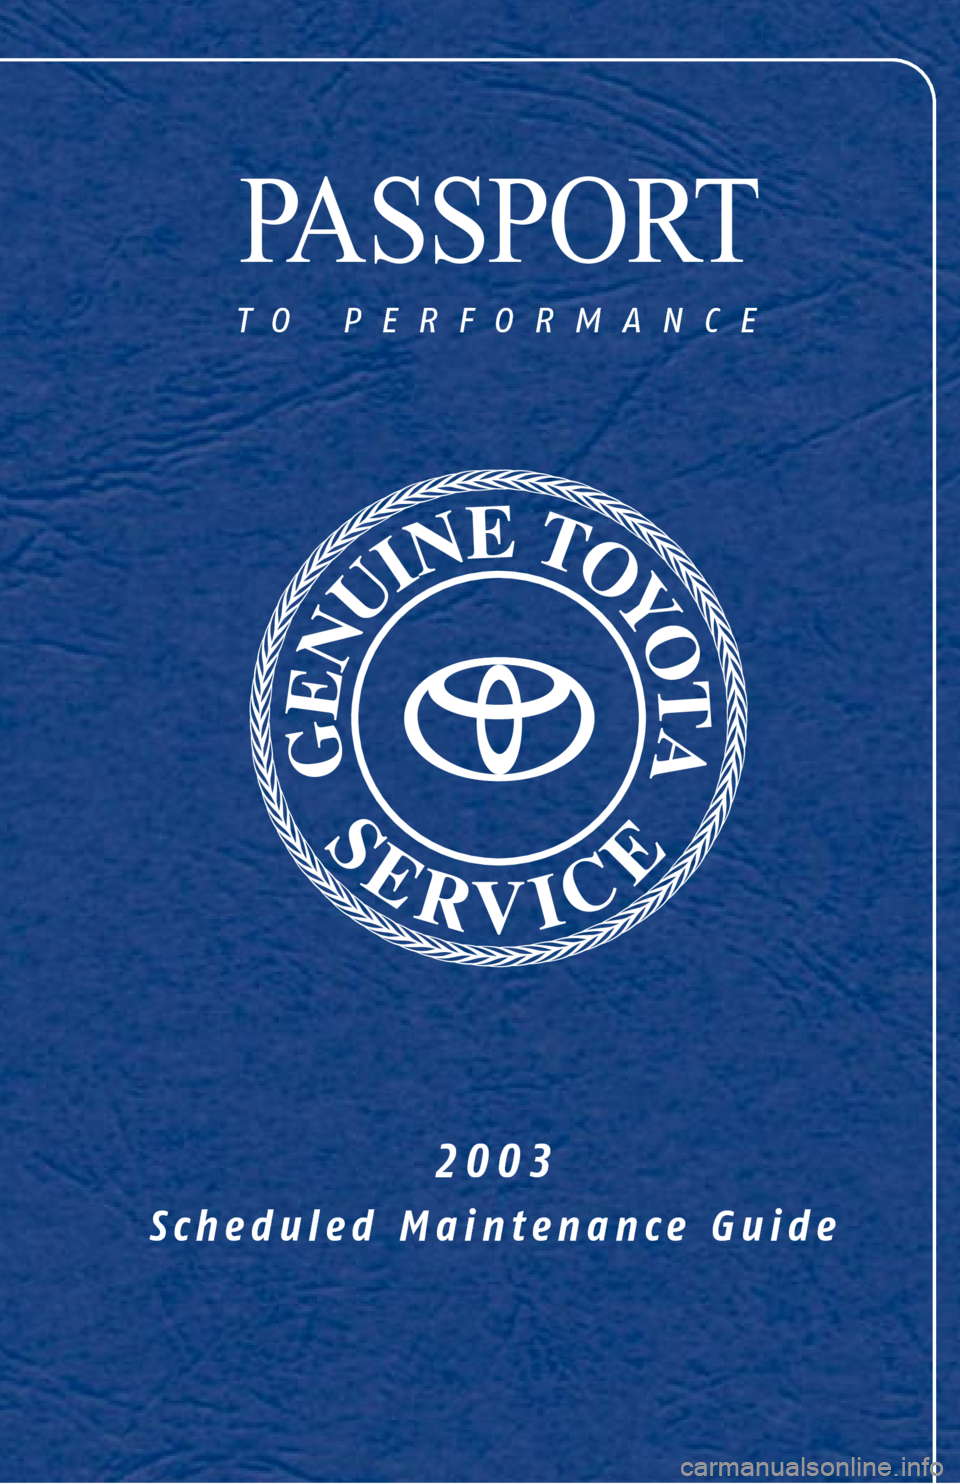 TOYOTA LAND CRUISER 2003 J100 Scheduled Maintenance Guide PASSPORT
to performance
2003
Scheduled Maintenance Guide 